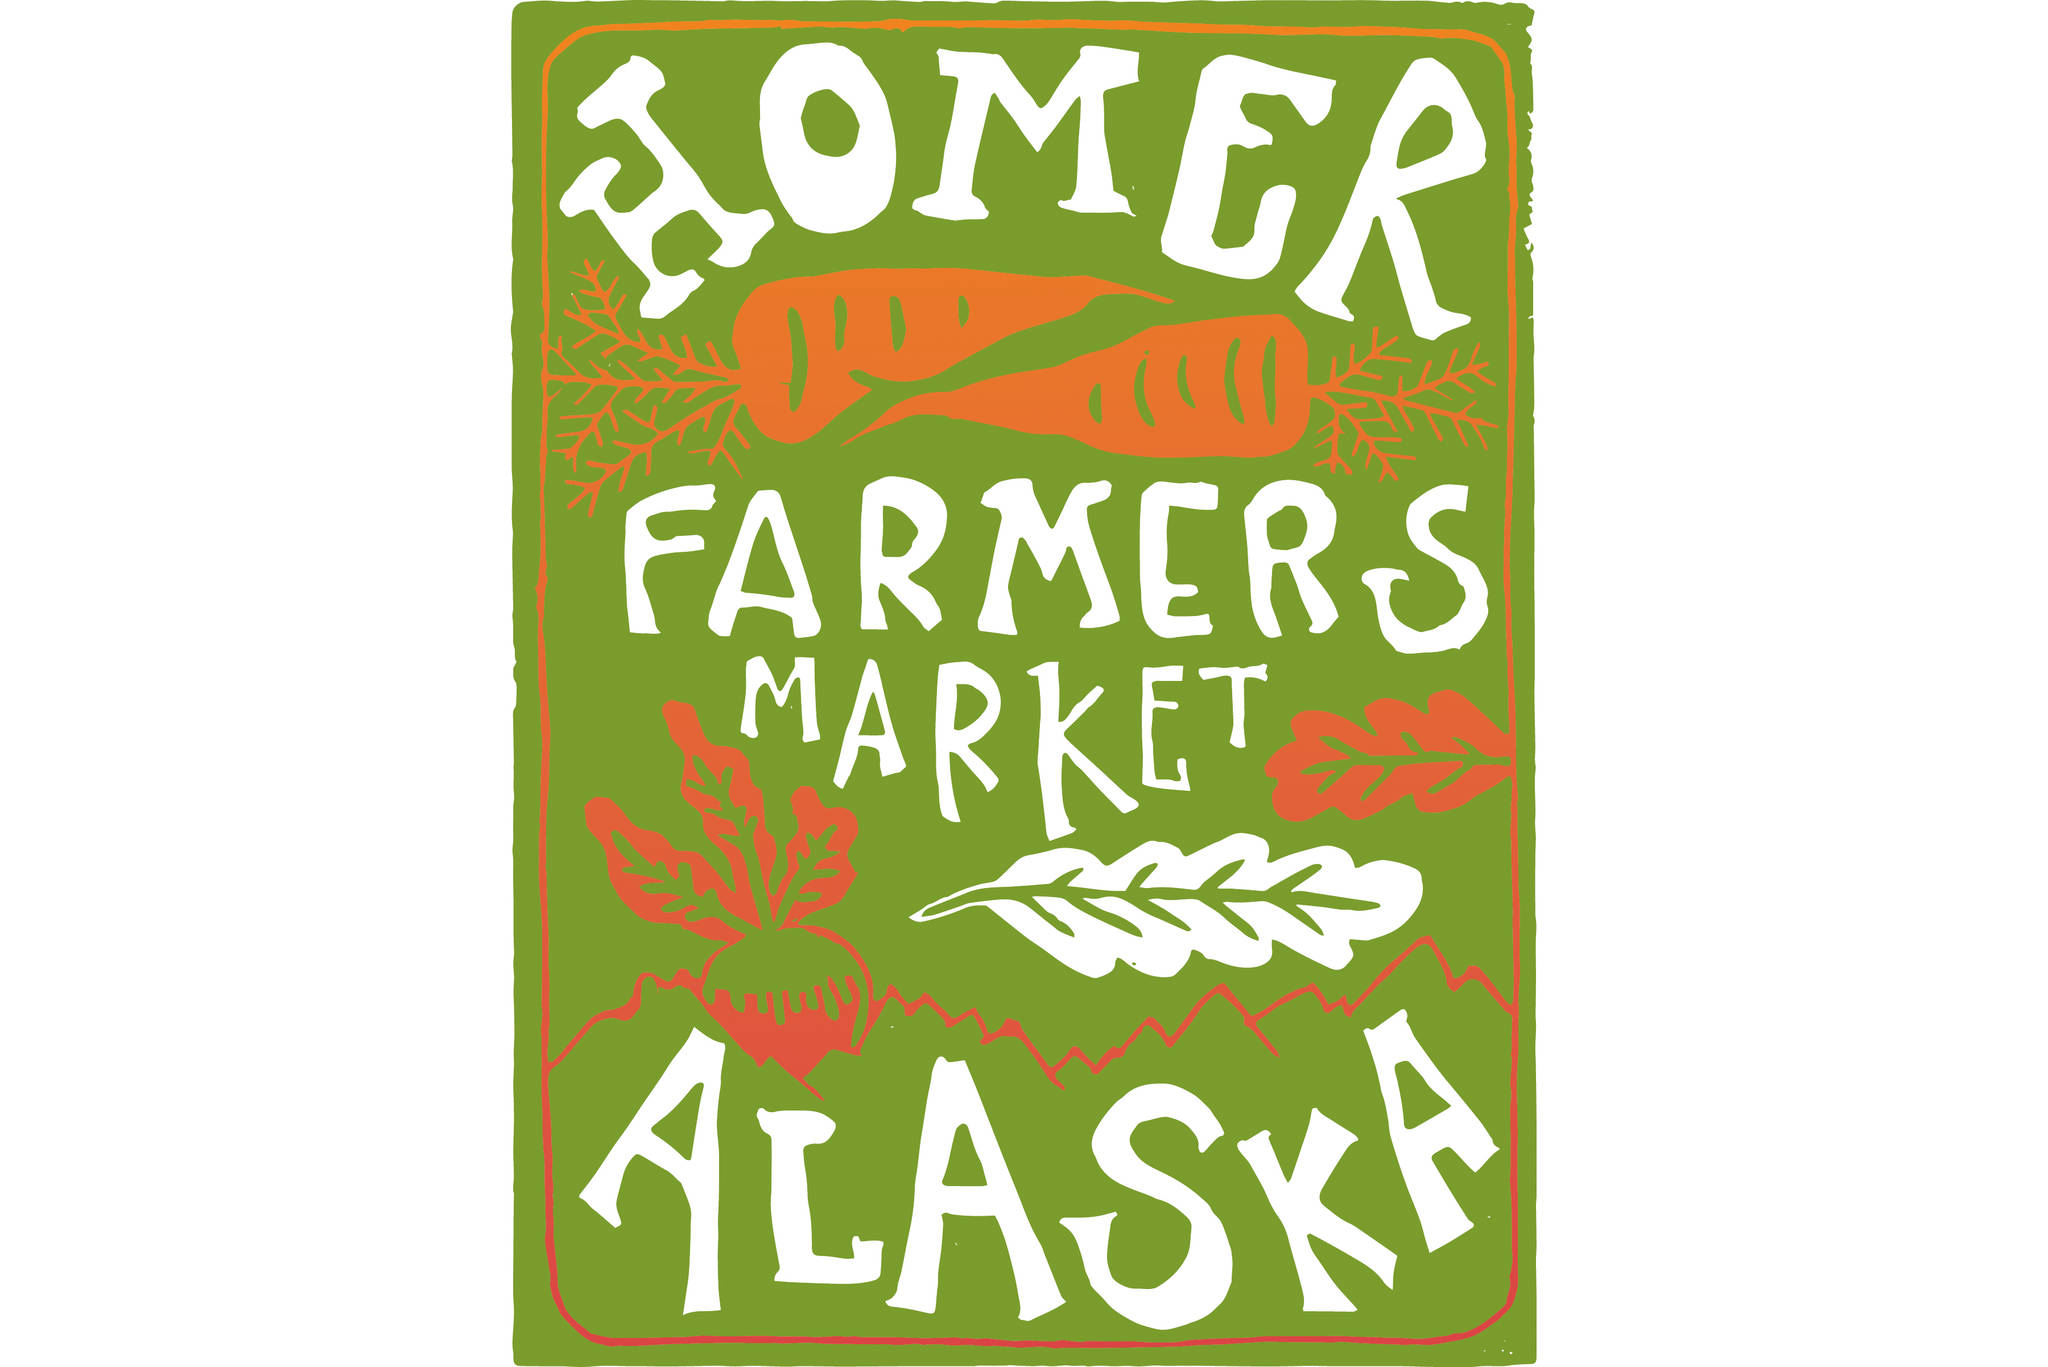 Homer Farmers Market: Market closes Saturday with potluck